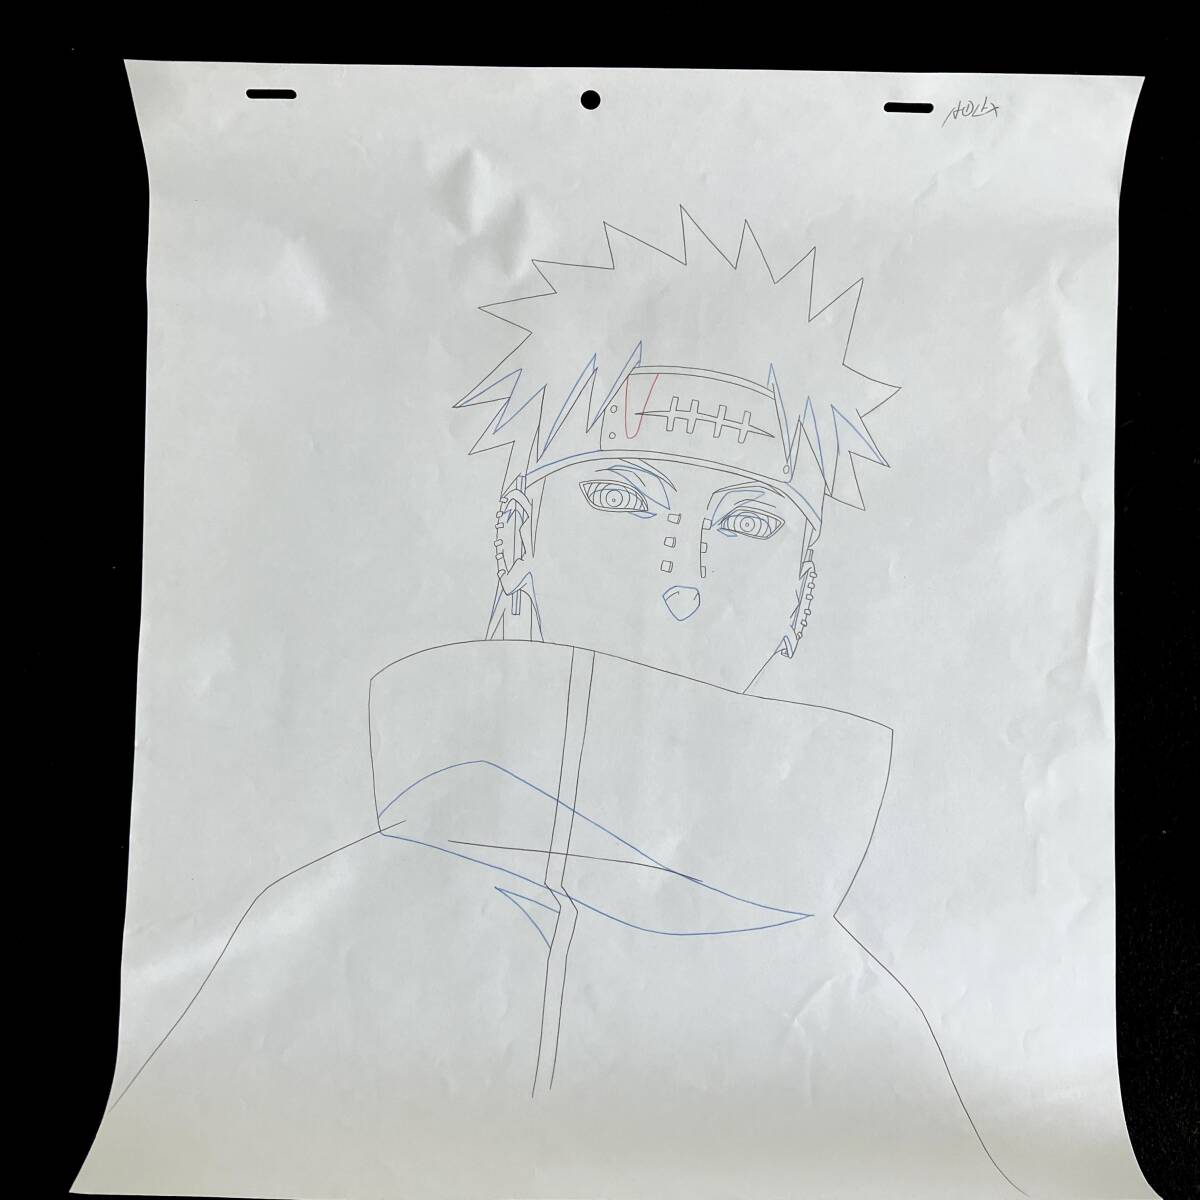  Naruto (Наруто) исходная картина 25 шт. комплект pe in |Cel Genga цифровая картинка 